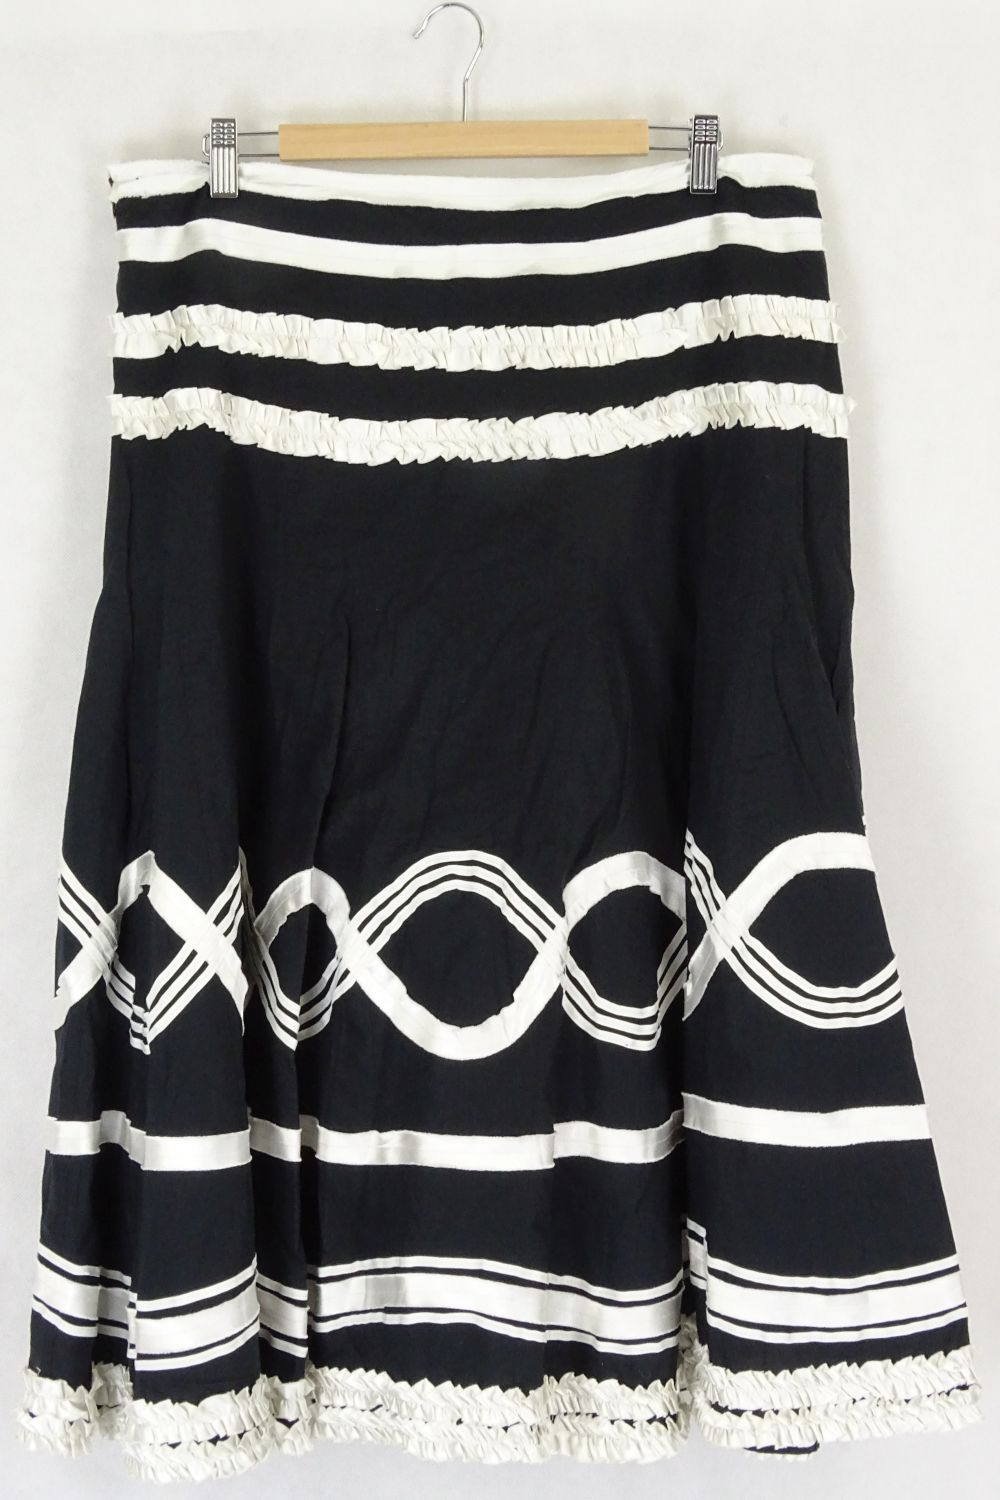 Pingpong Black Cotton Skirt 14